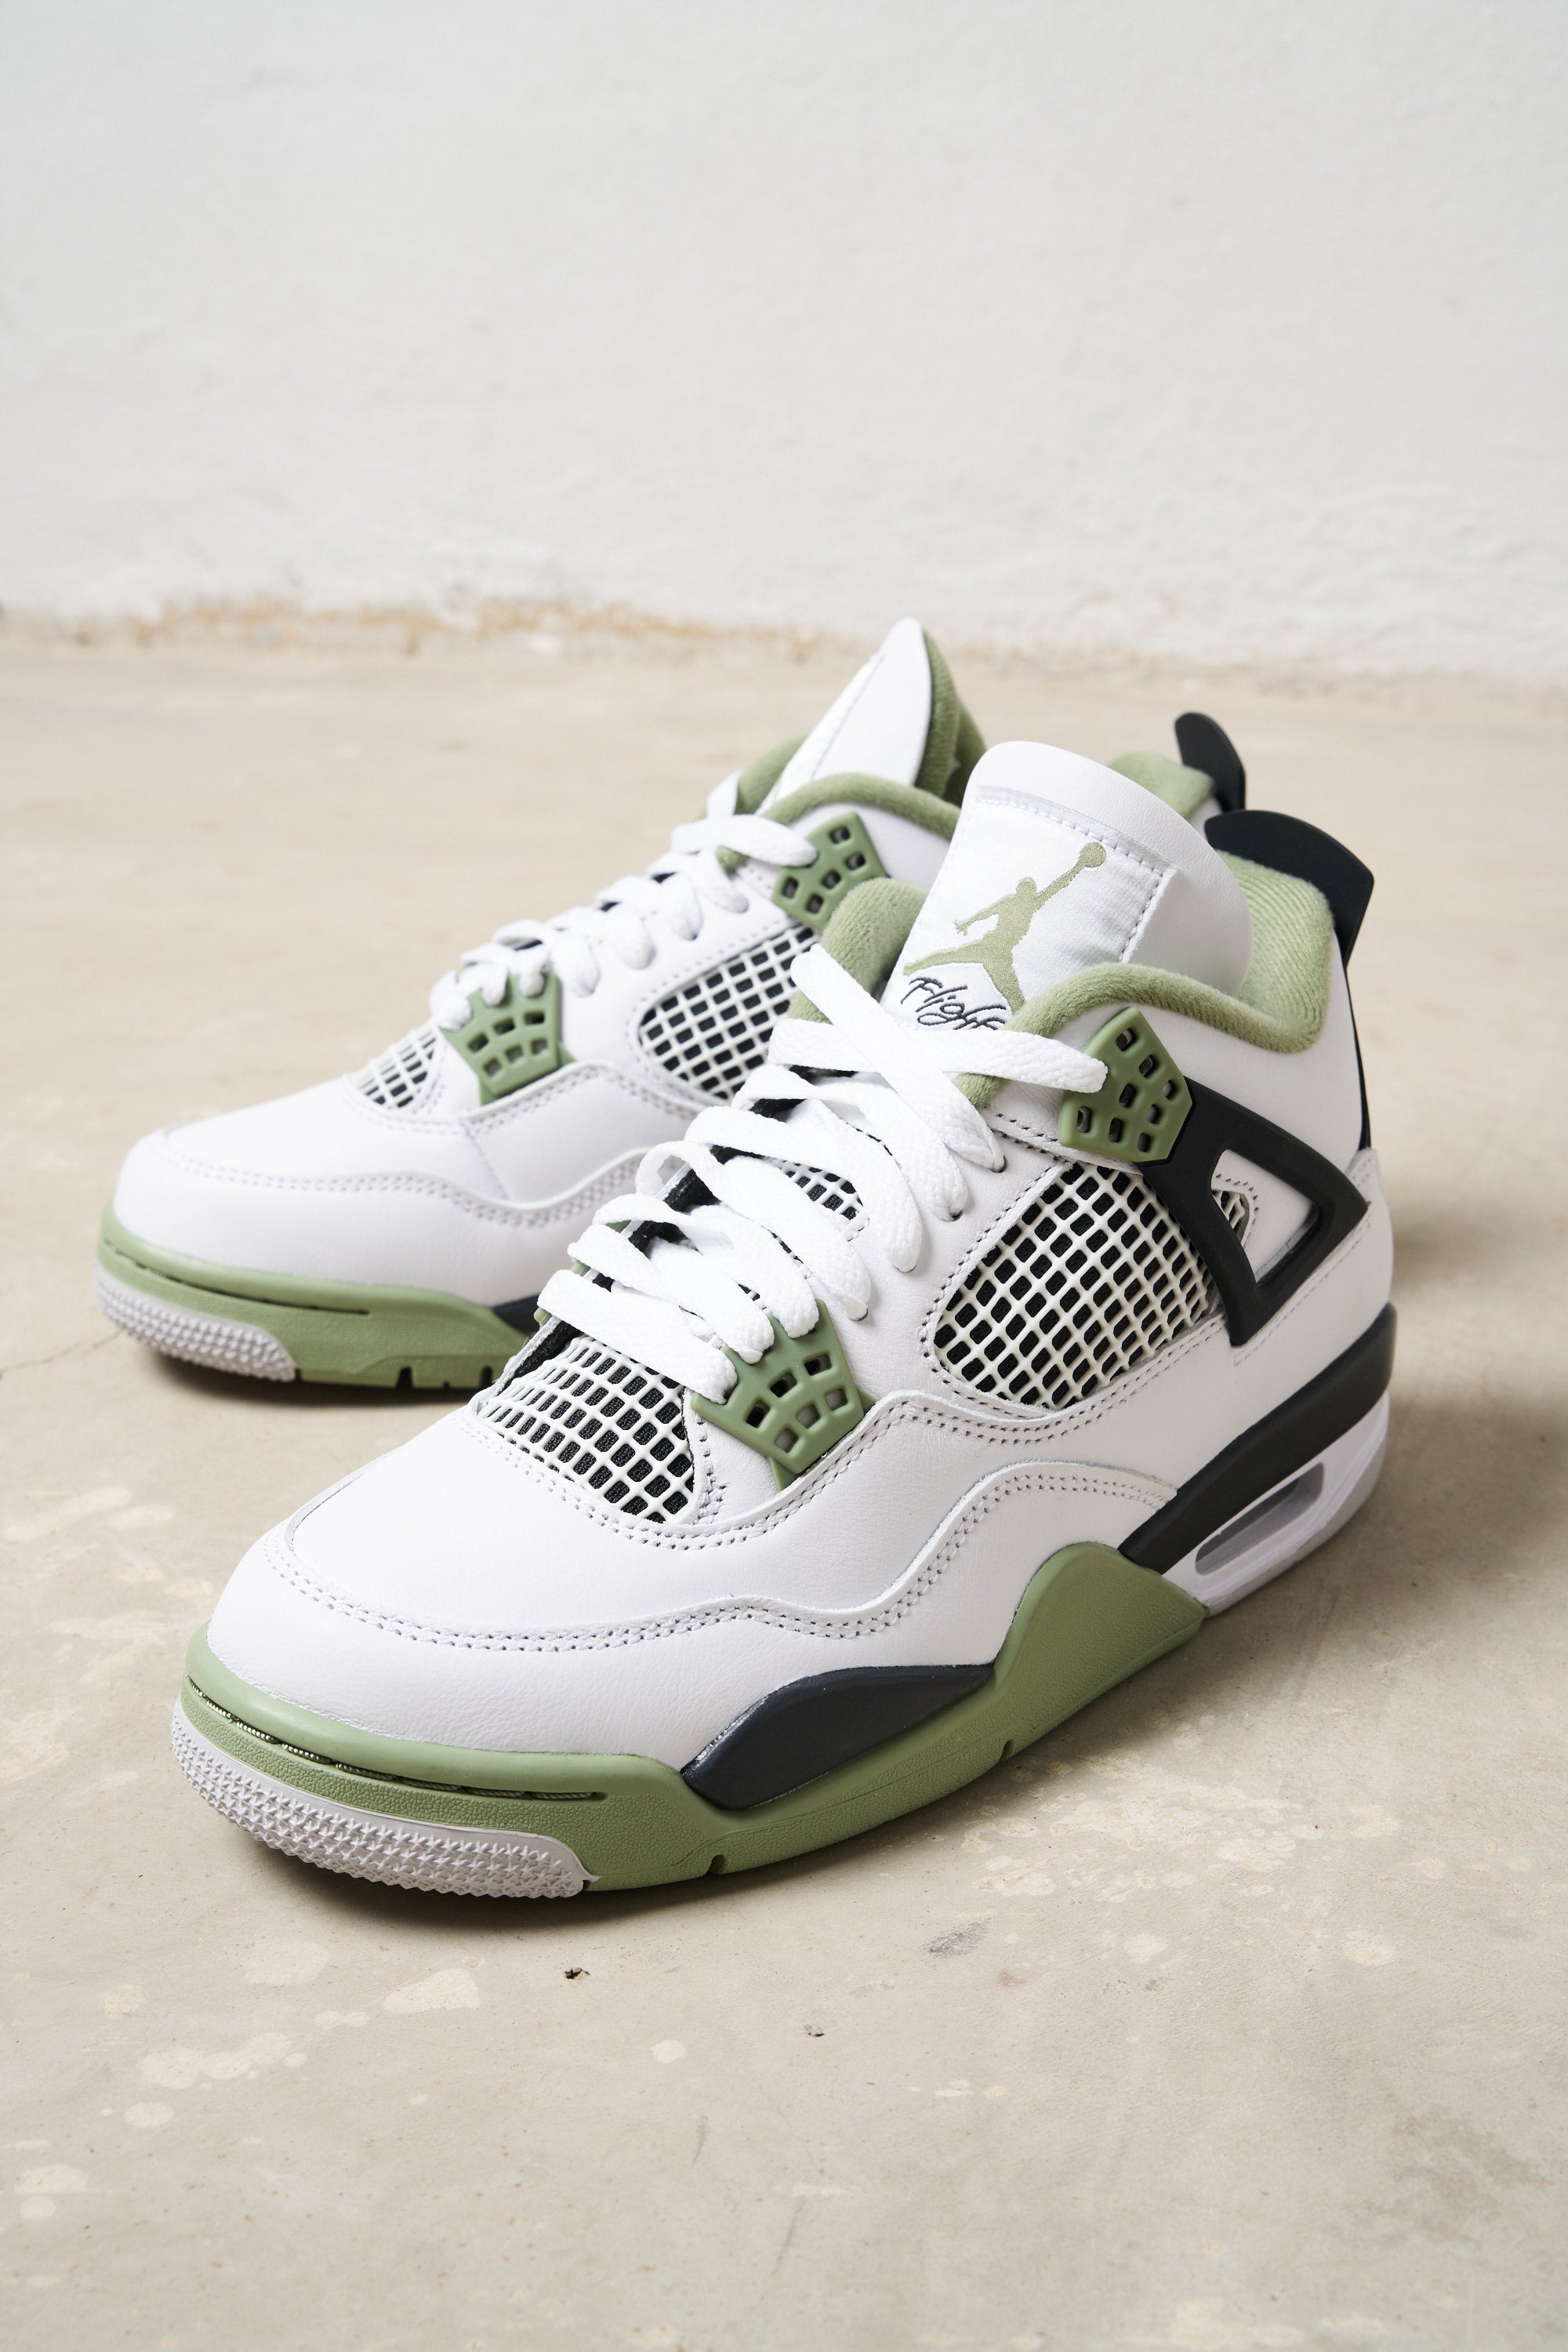 Nike Women's Air Jordan 4 Retro Shoes Seafoam Green White